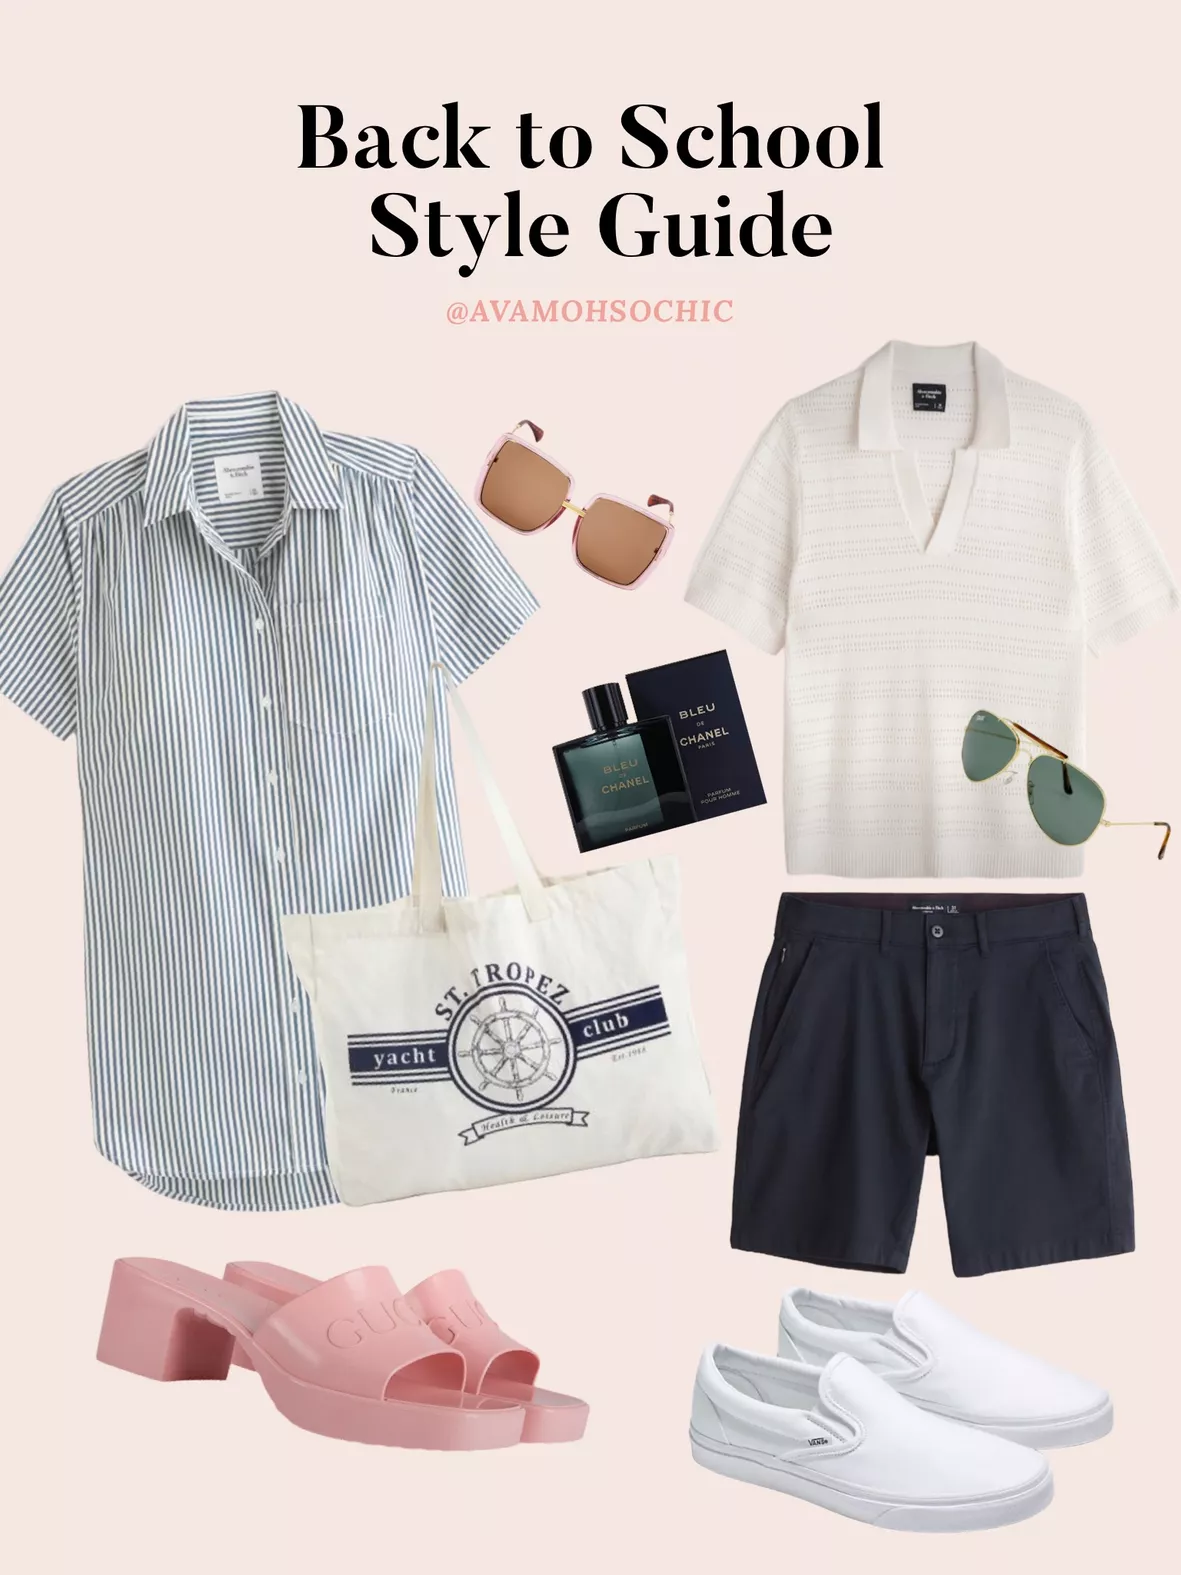 Shirt Style Guide: The Poplin Shirt